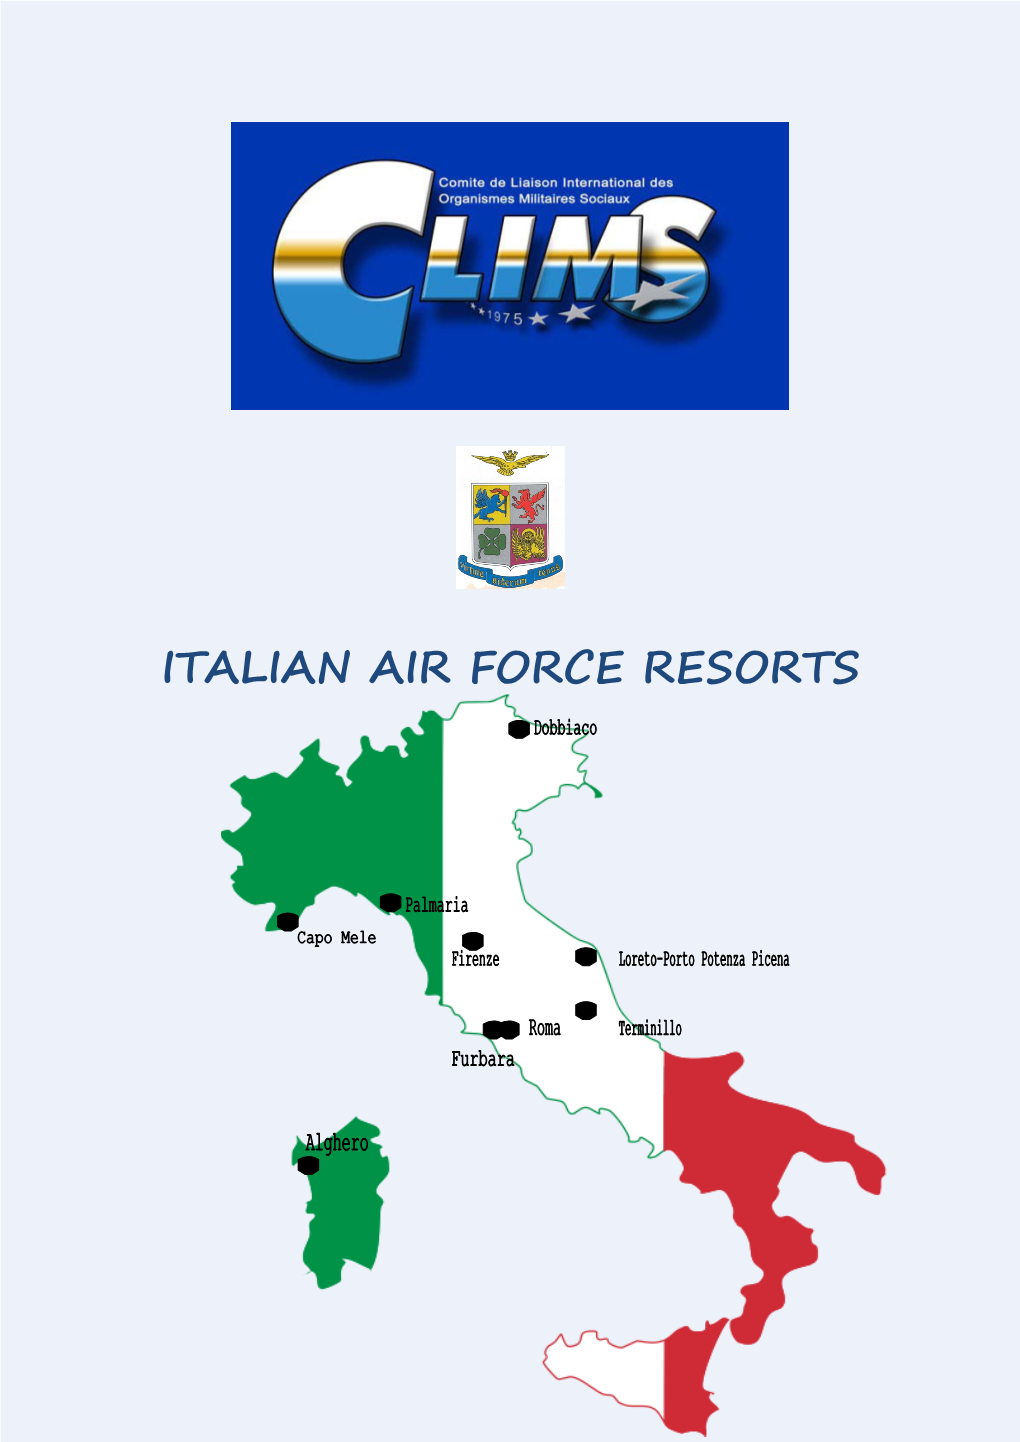 Italian Air Force Resorts